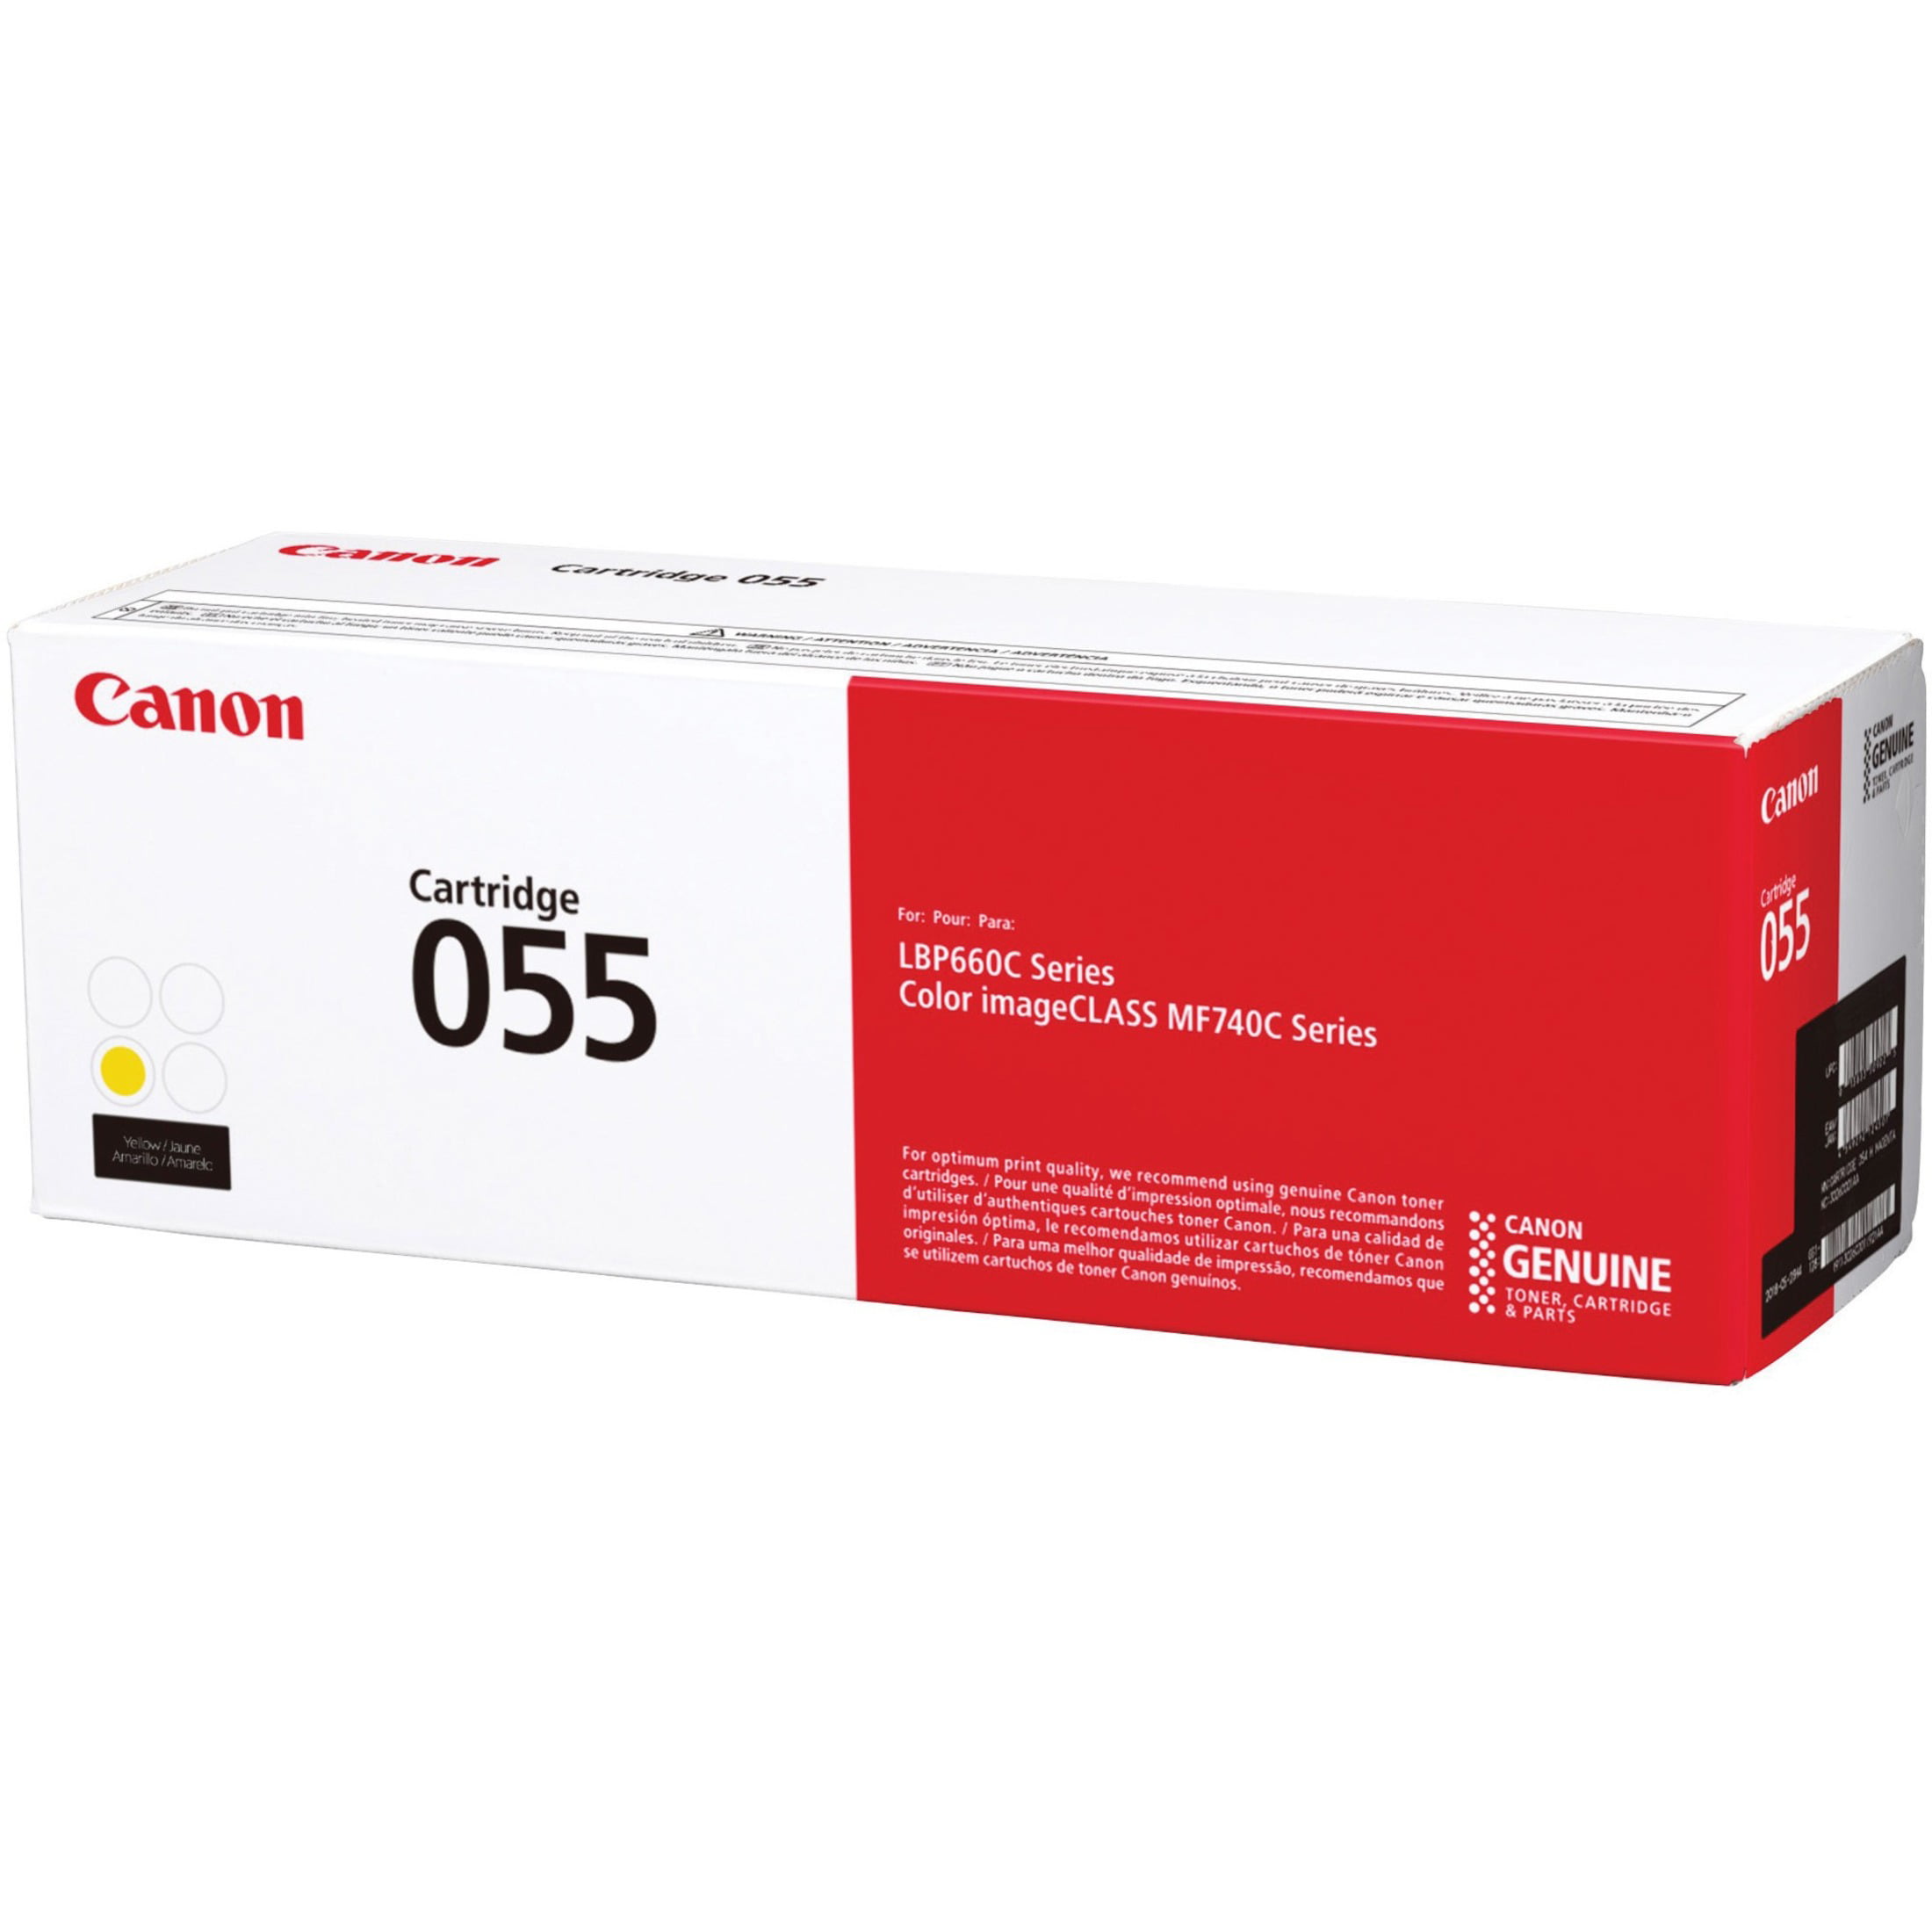 Canon Cartridge 055 Genuine OEM 3013C001 Standard Capacity Yellow Toner